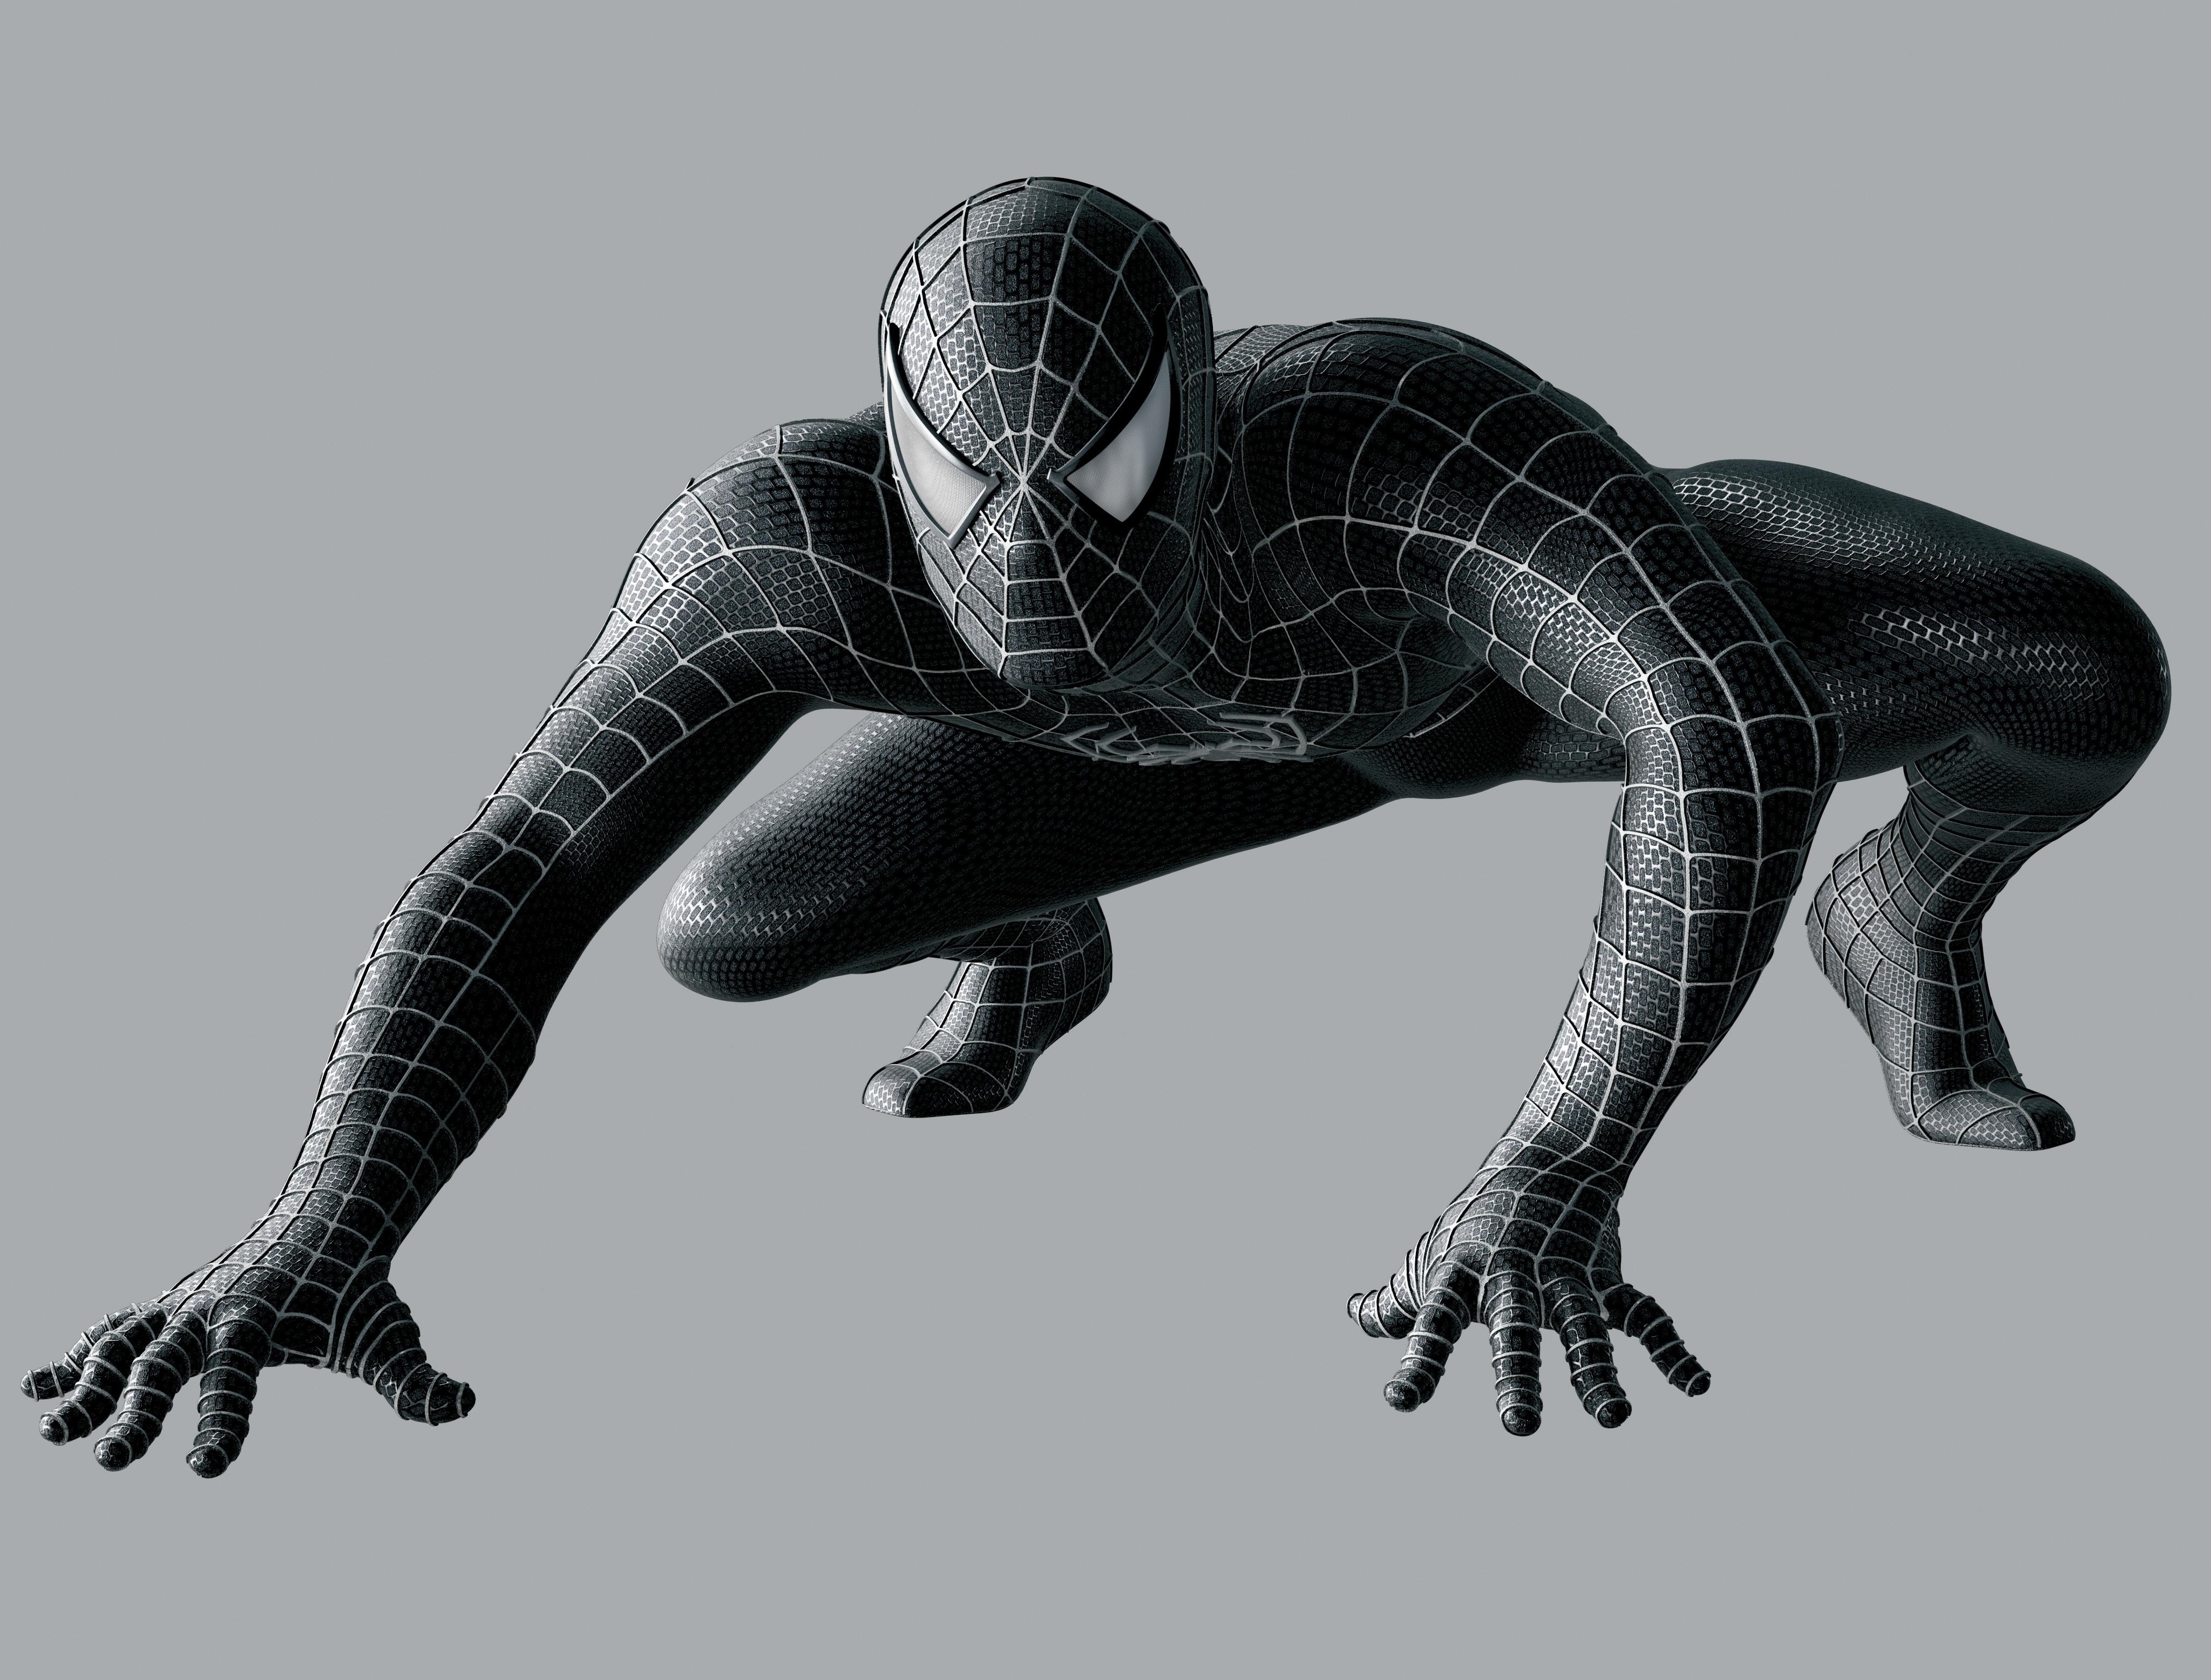  Black  Spiderman  Iphone  Wallpapers  HD  PixelsTalk Net